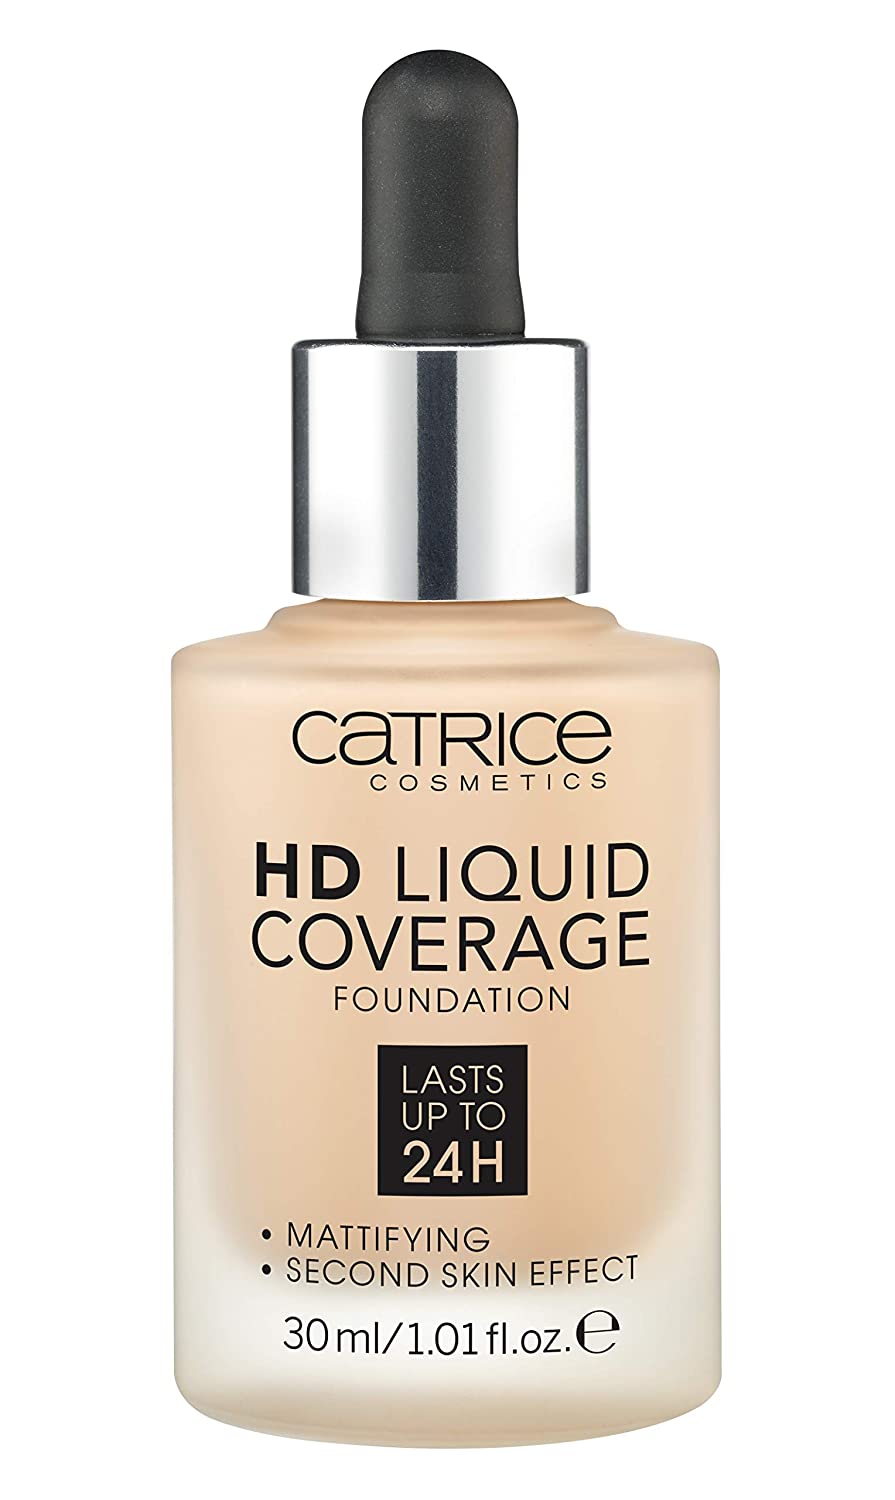 2. Catrice | HD Liquid Coverage Foundation